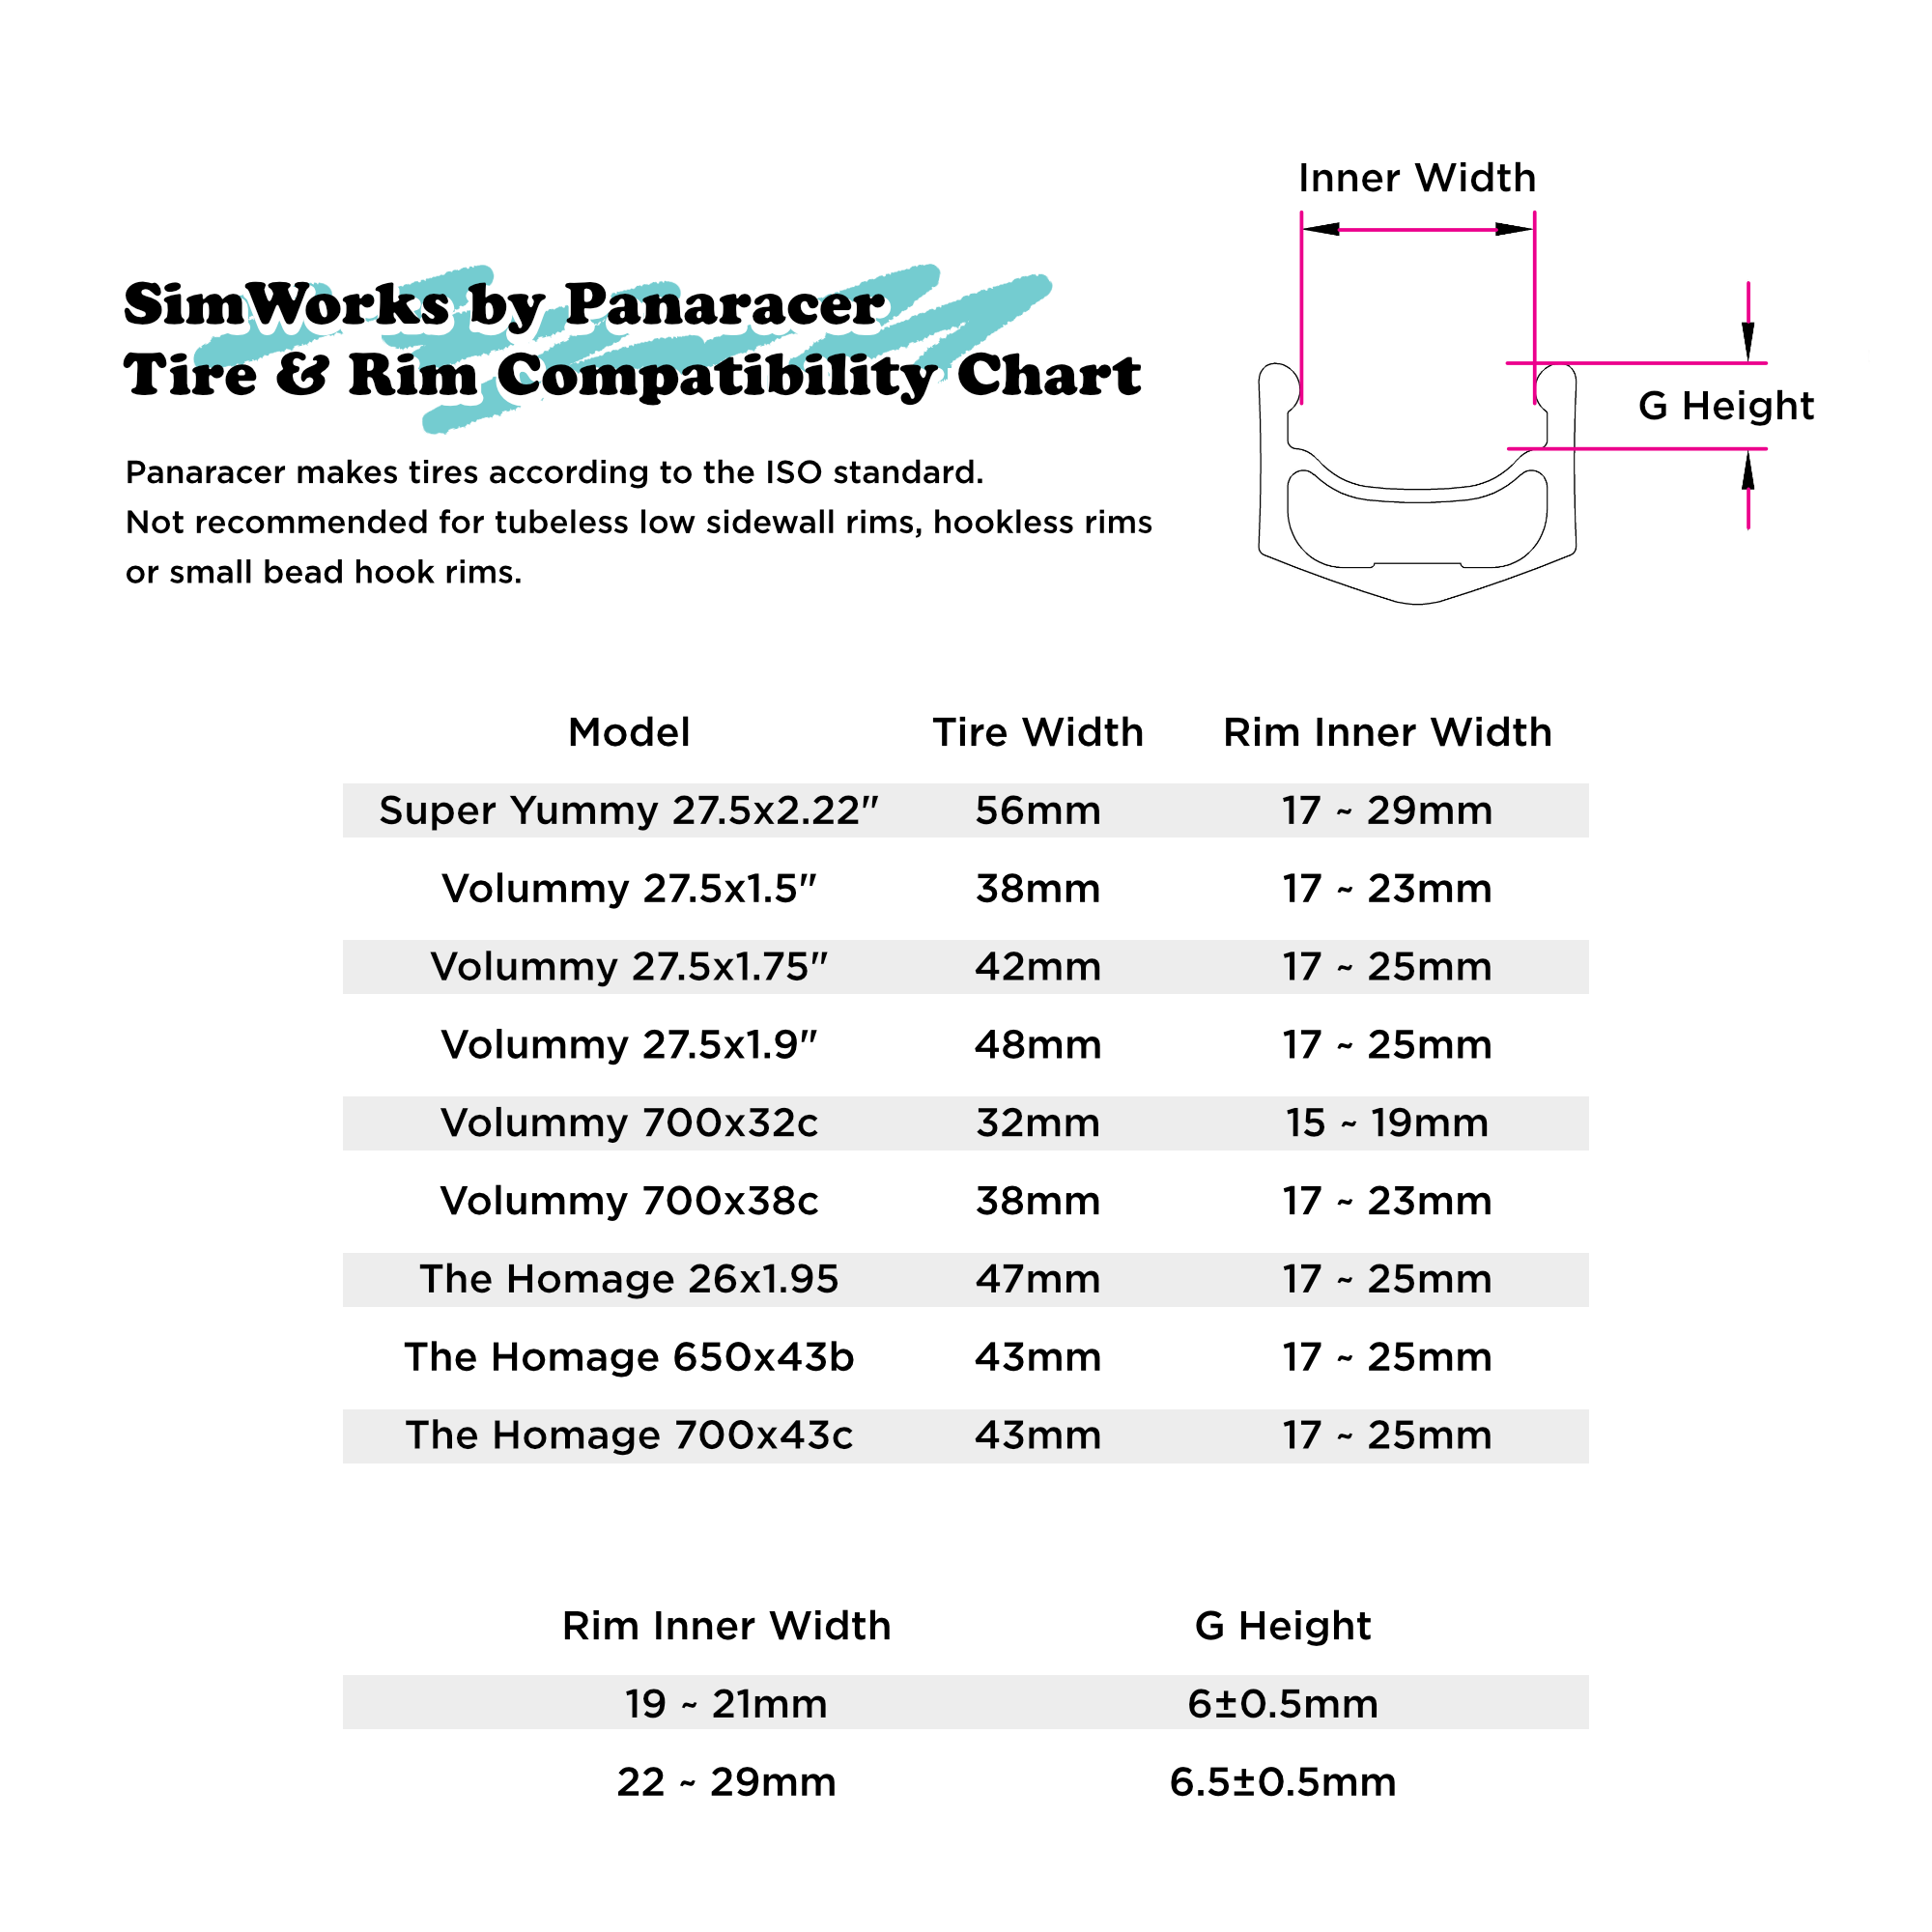 Tire Compatibility Chart